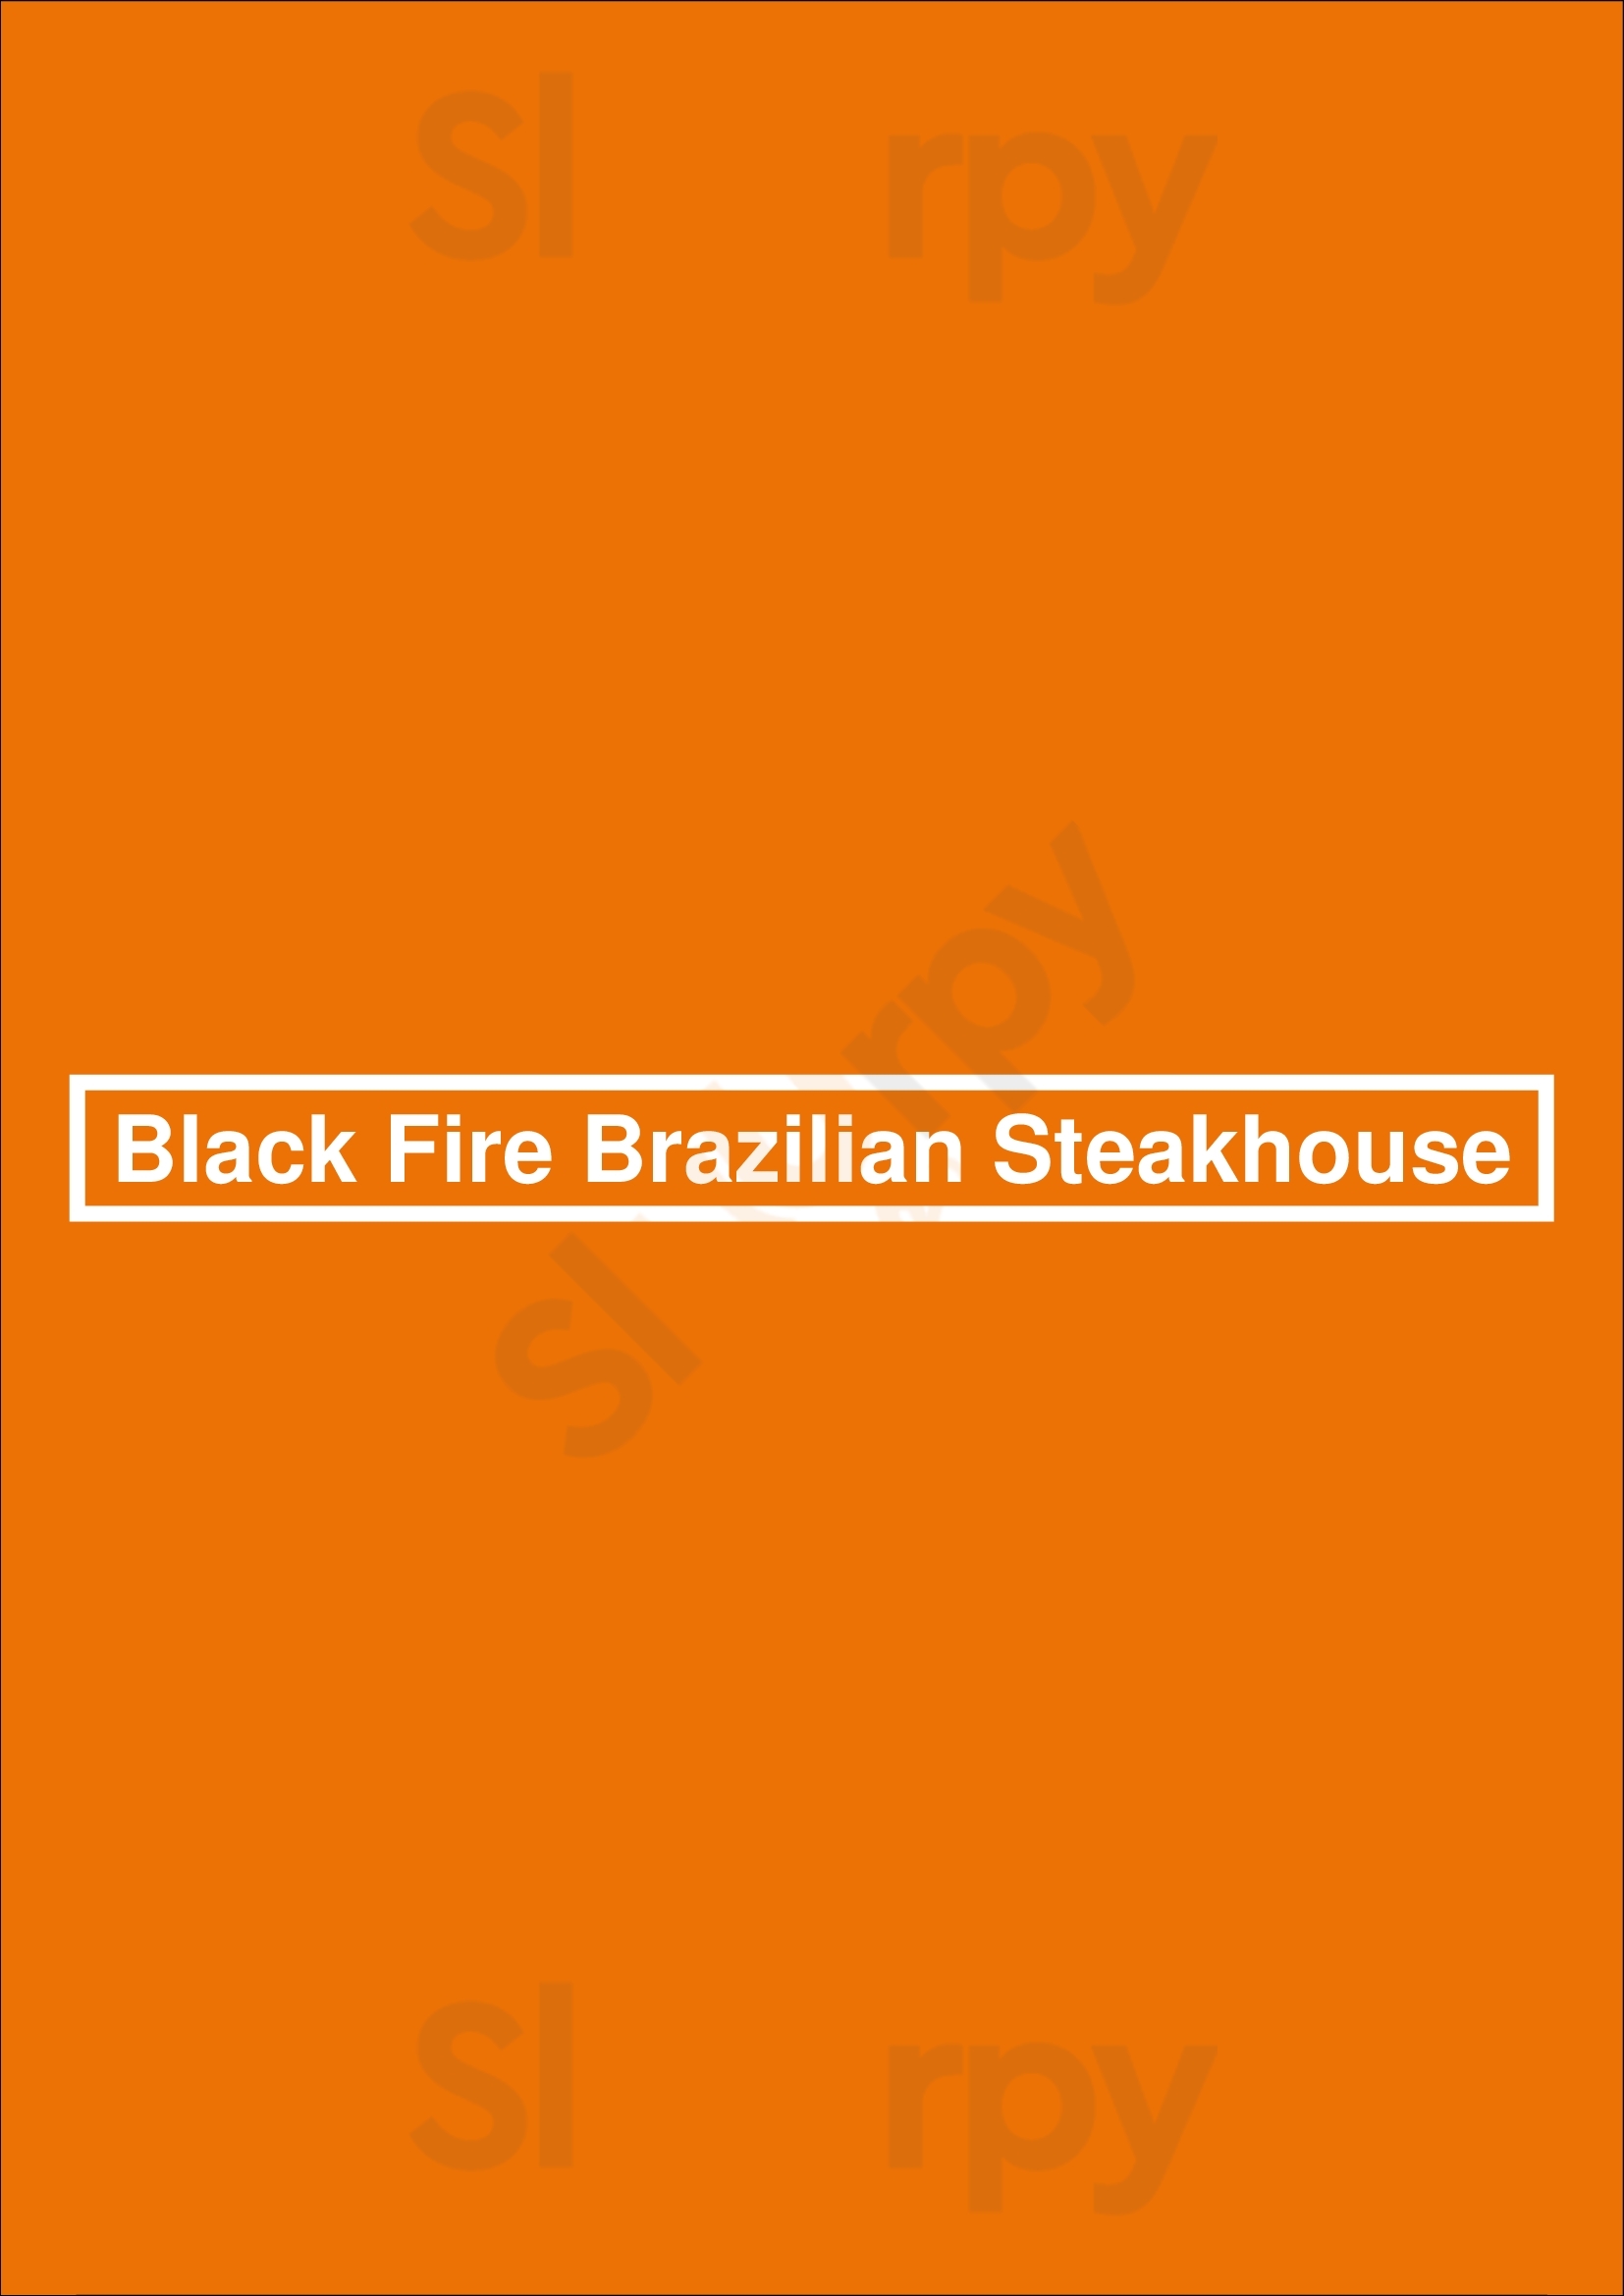 Black Fire Brazilian Steakhouse Orlando Menu - 1